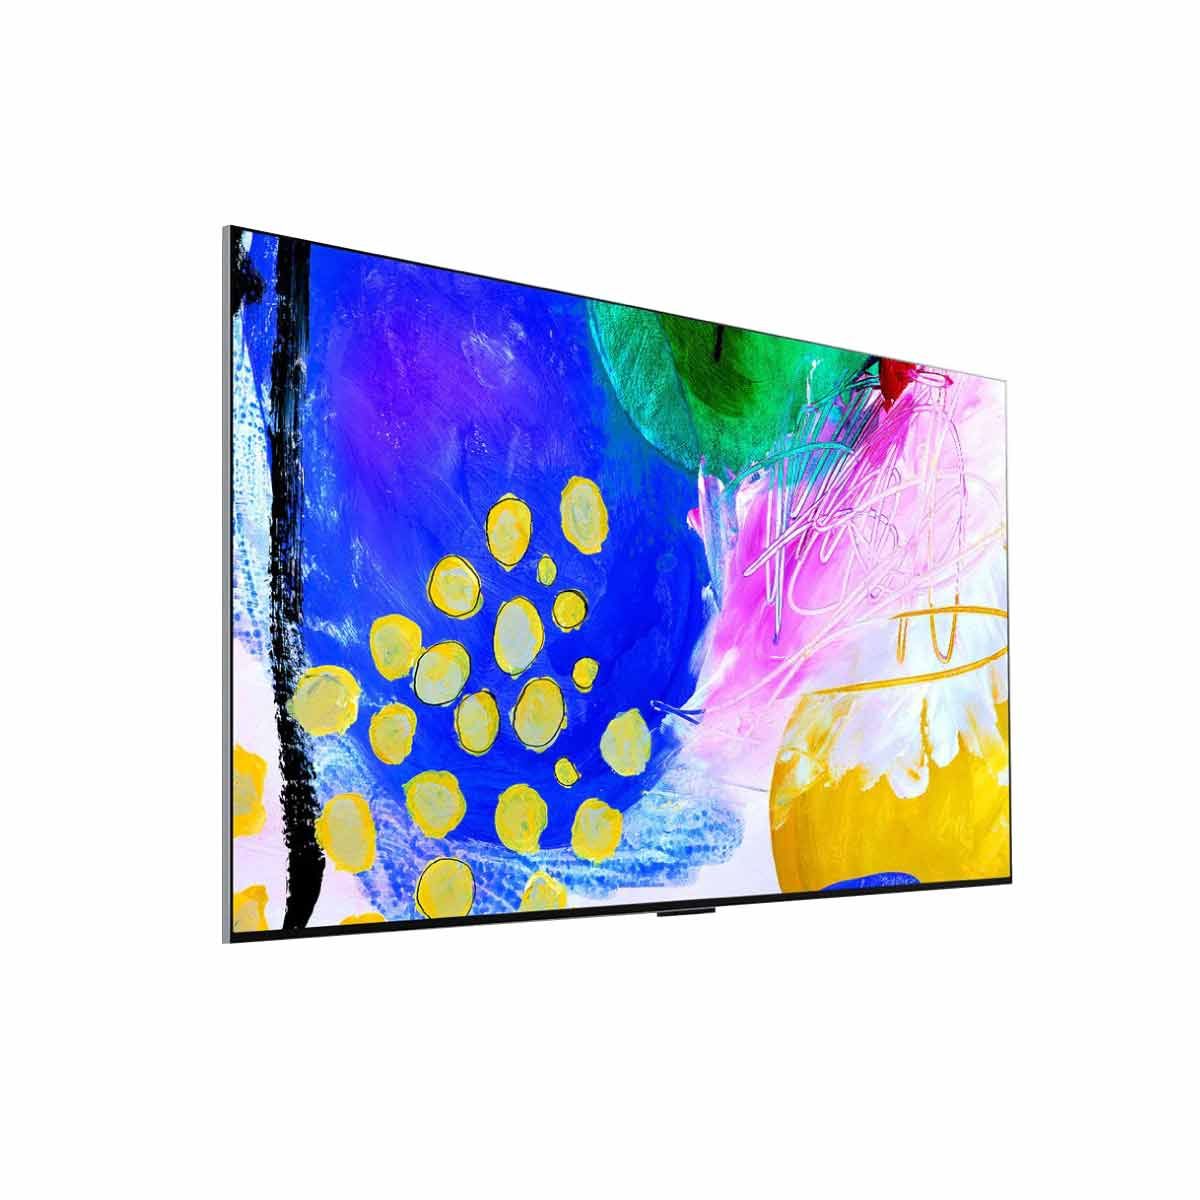 LG OLED EVO 4K Smart TV รุ่น OLED55G2PSA  สมาร์ททีวี 55 นิ้ว Dolby Vision Atmos Magic Remote